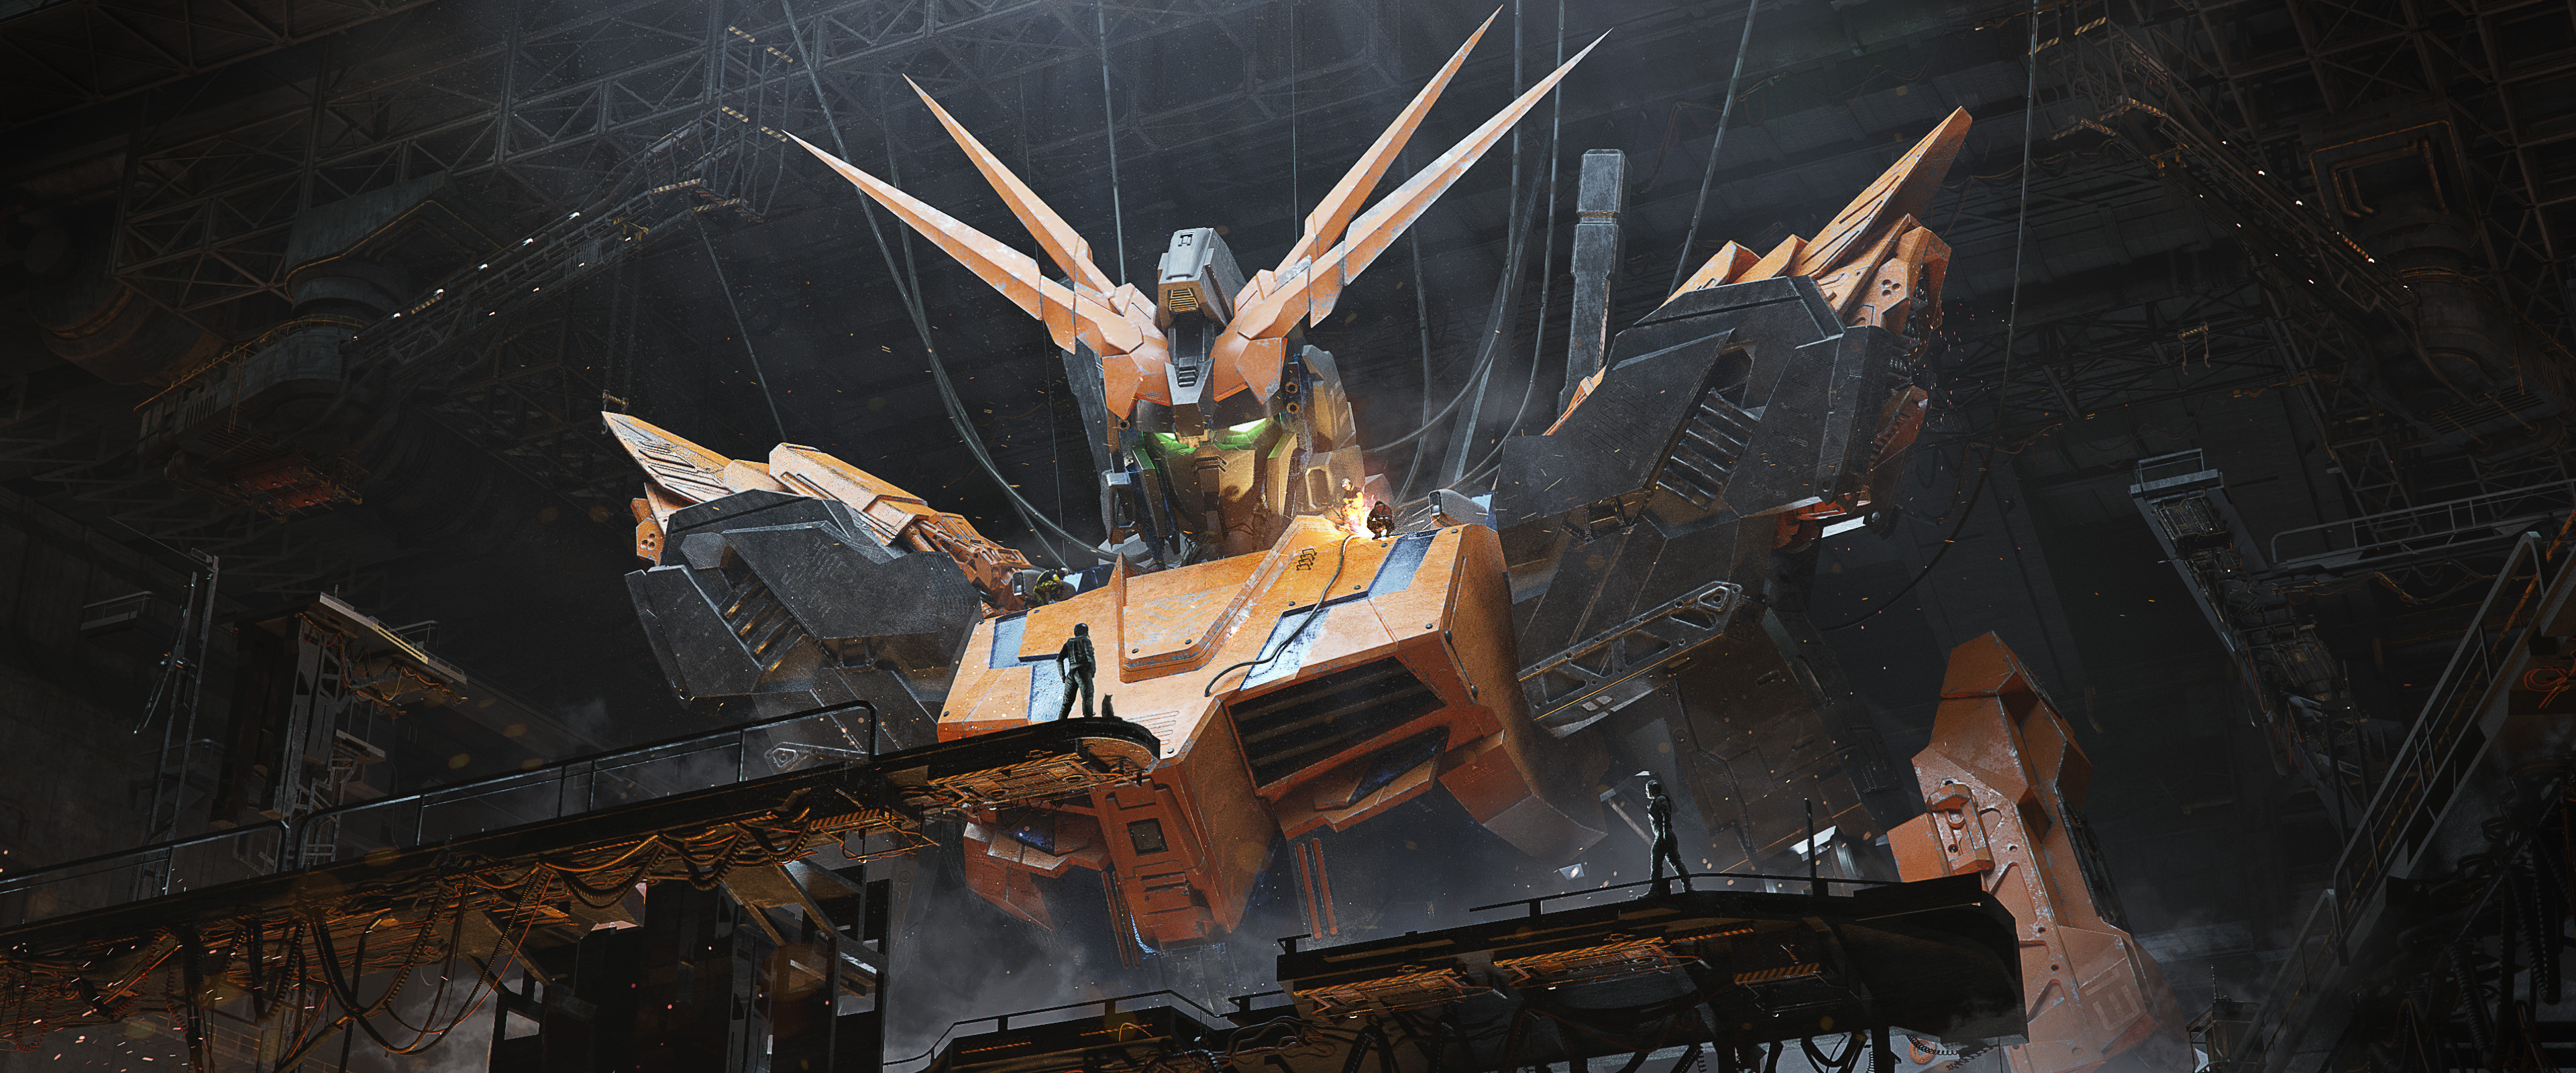 General 3840x1600 Gundam robot giant digital art illustration artwork CGI 2D hangar concept art science fiction environment mechs